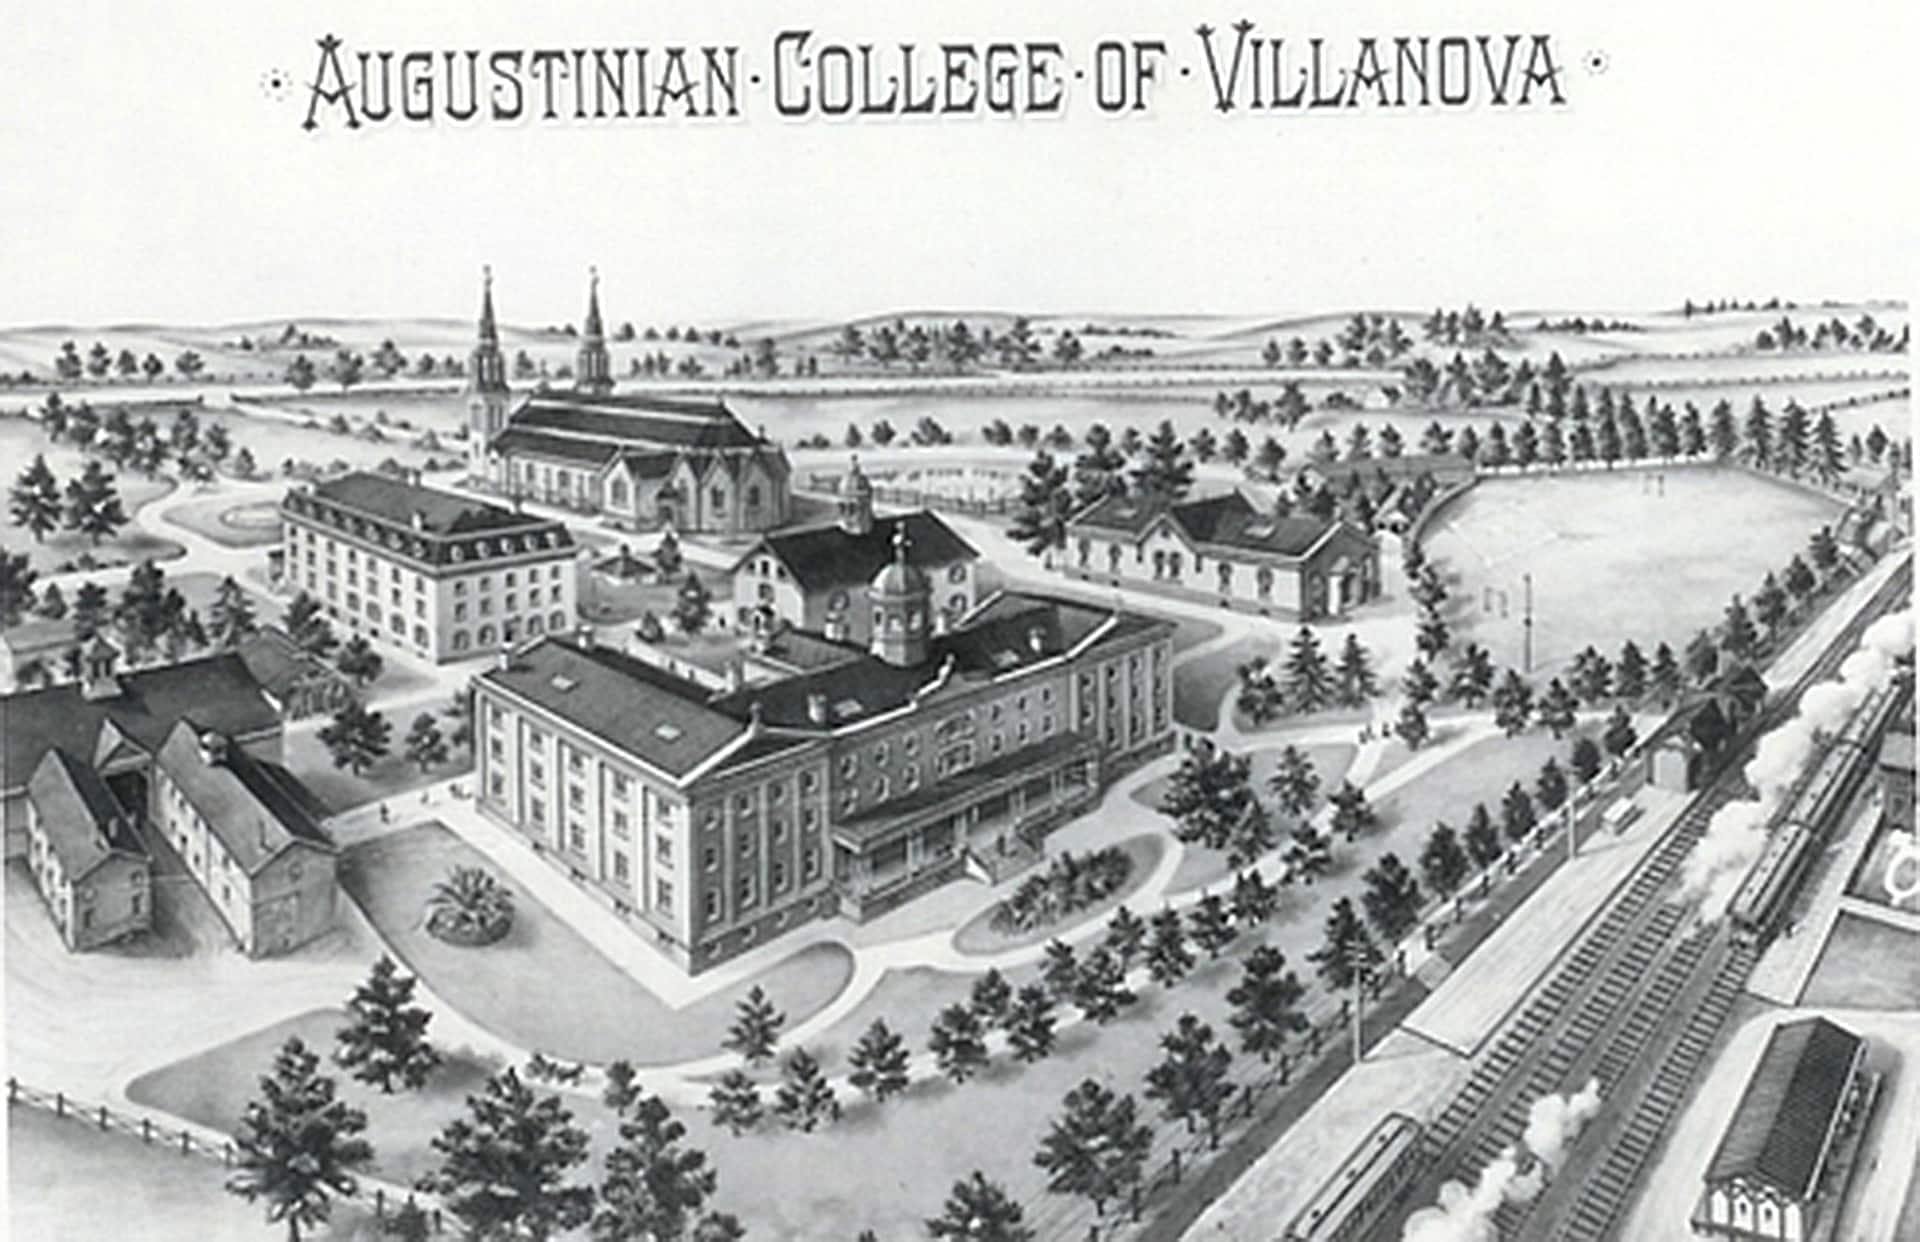 Augustinian College of Villanova